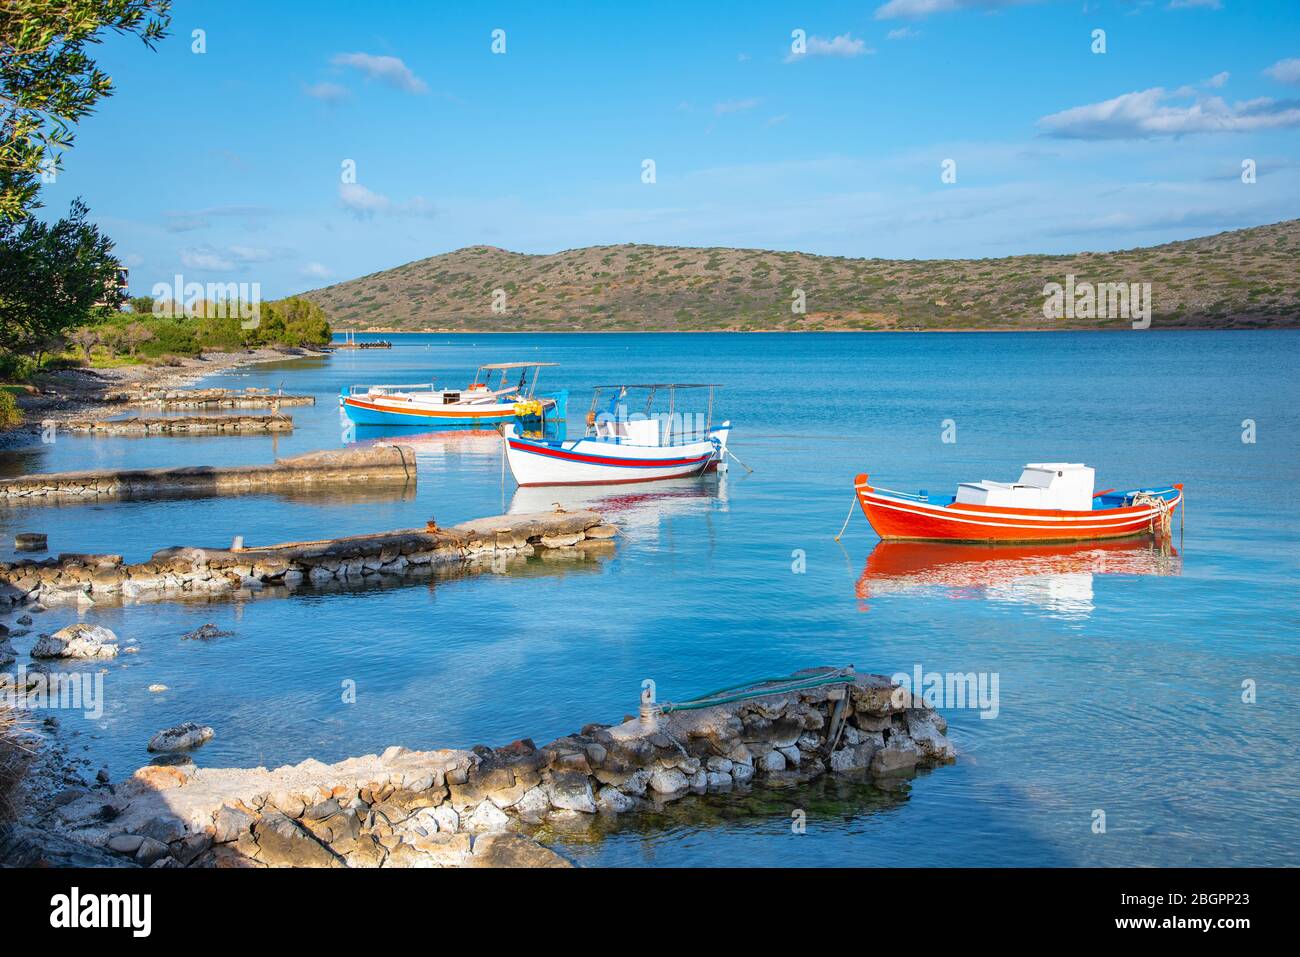 Sailing boat anchored in the peaceful gulf of Elounda, Crete, Greece. Stock Photo